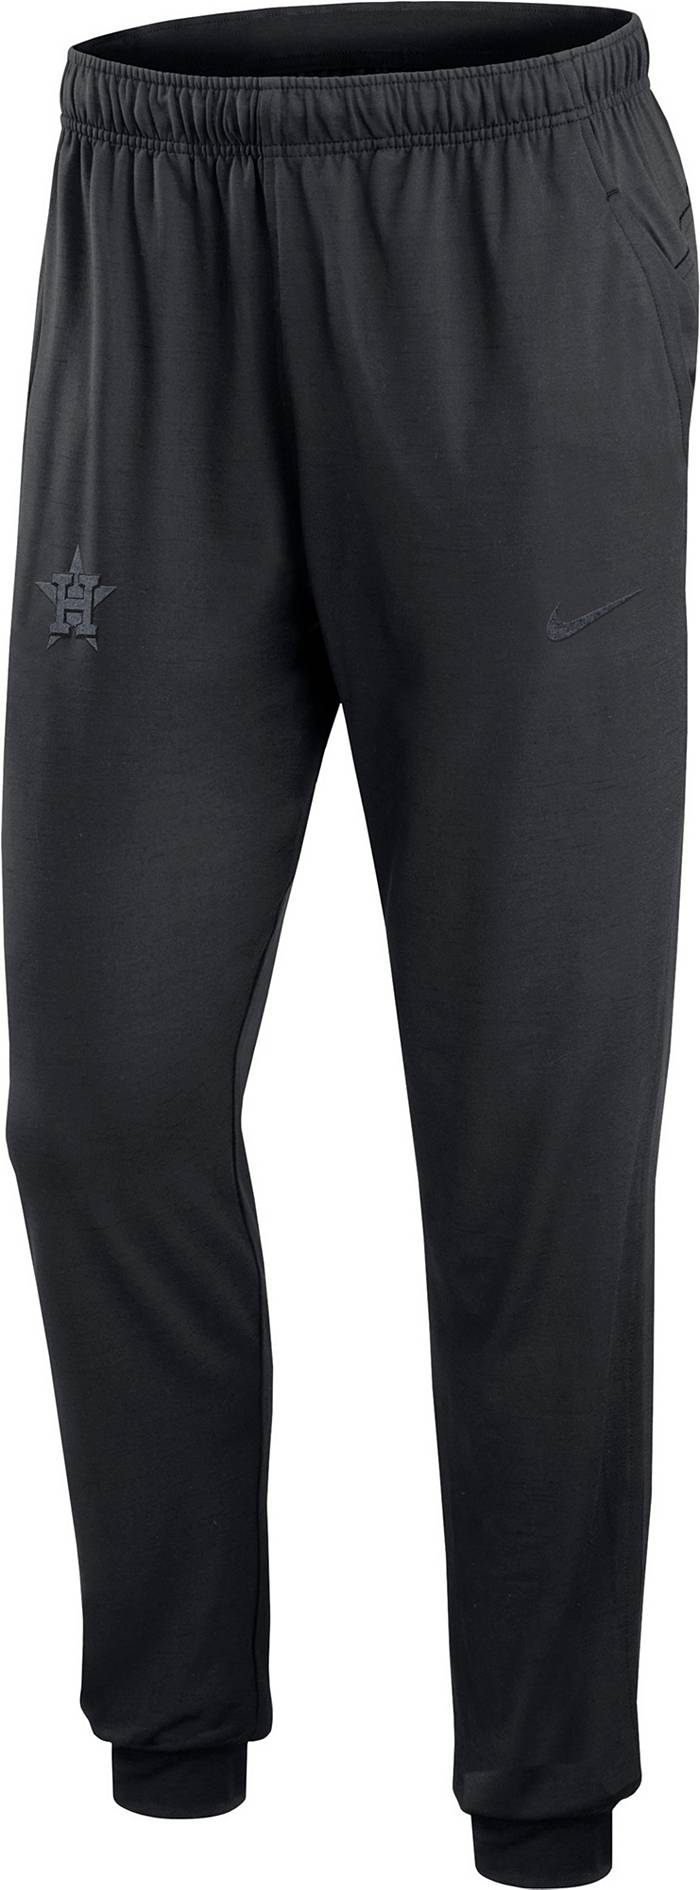 Nike Men's Houston Astros Alex Bregman #2 2022 City Connect T-Shirt